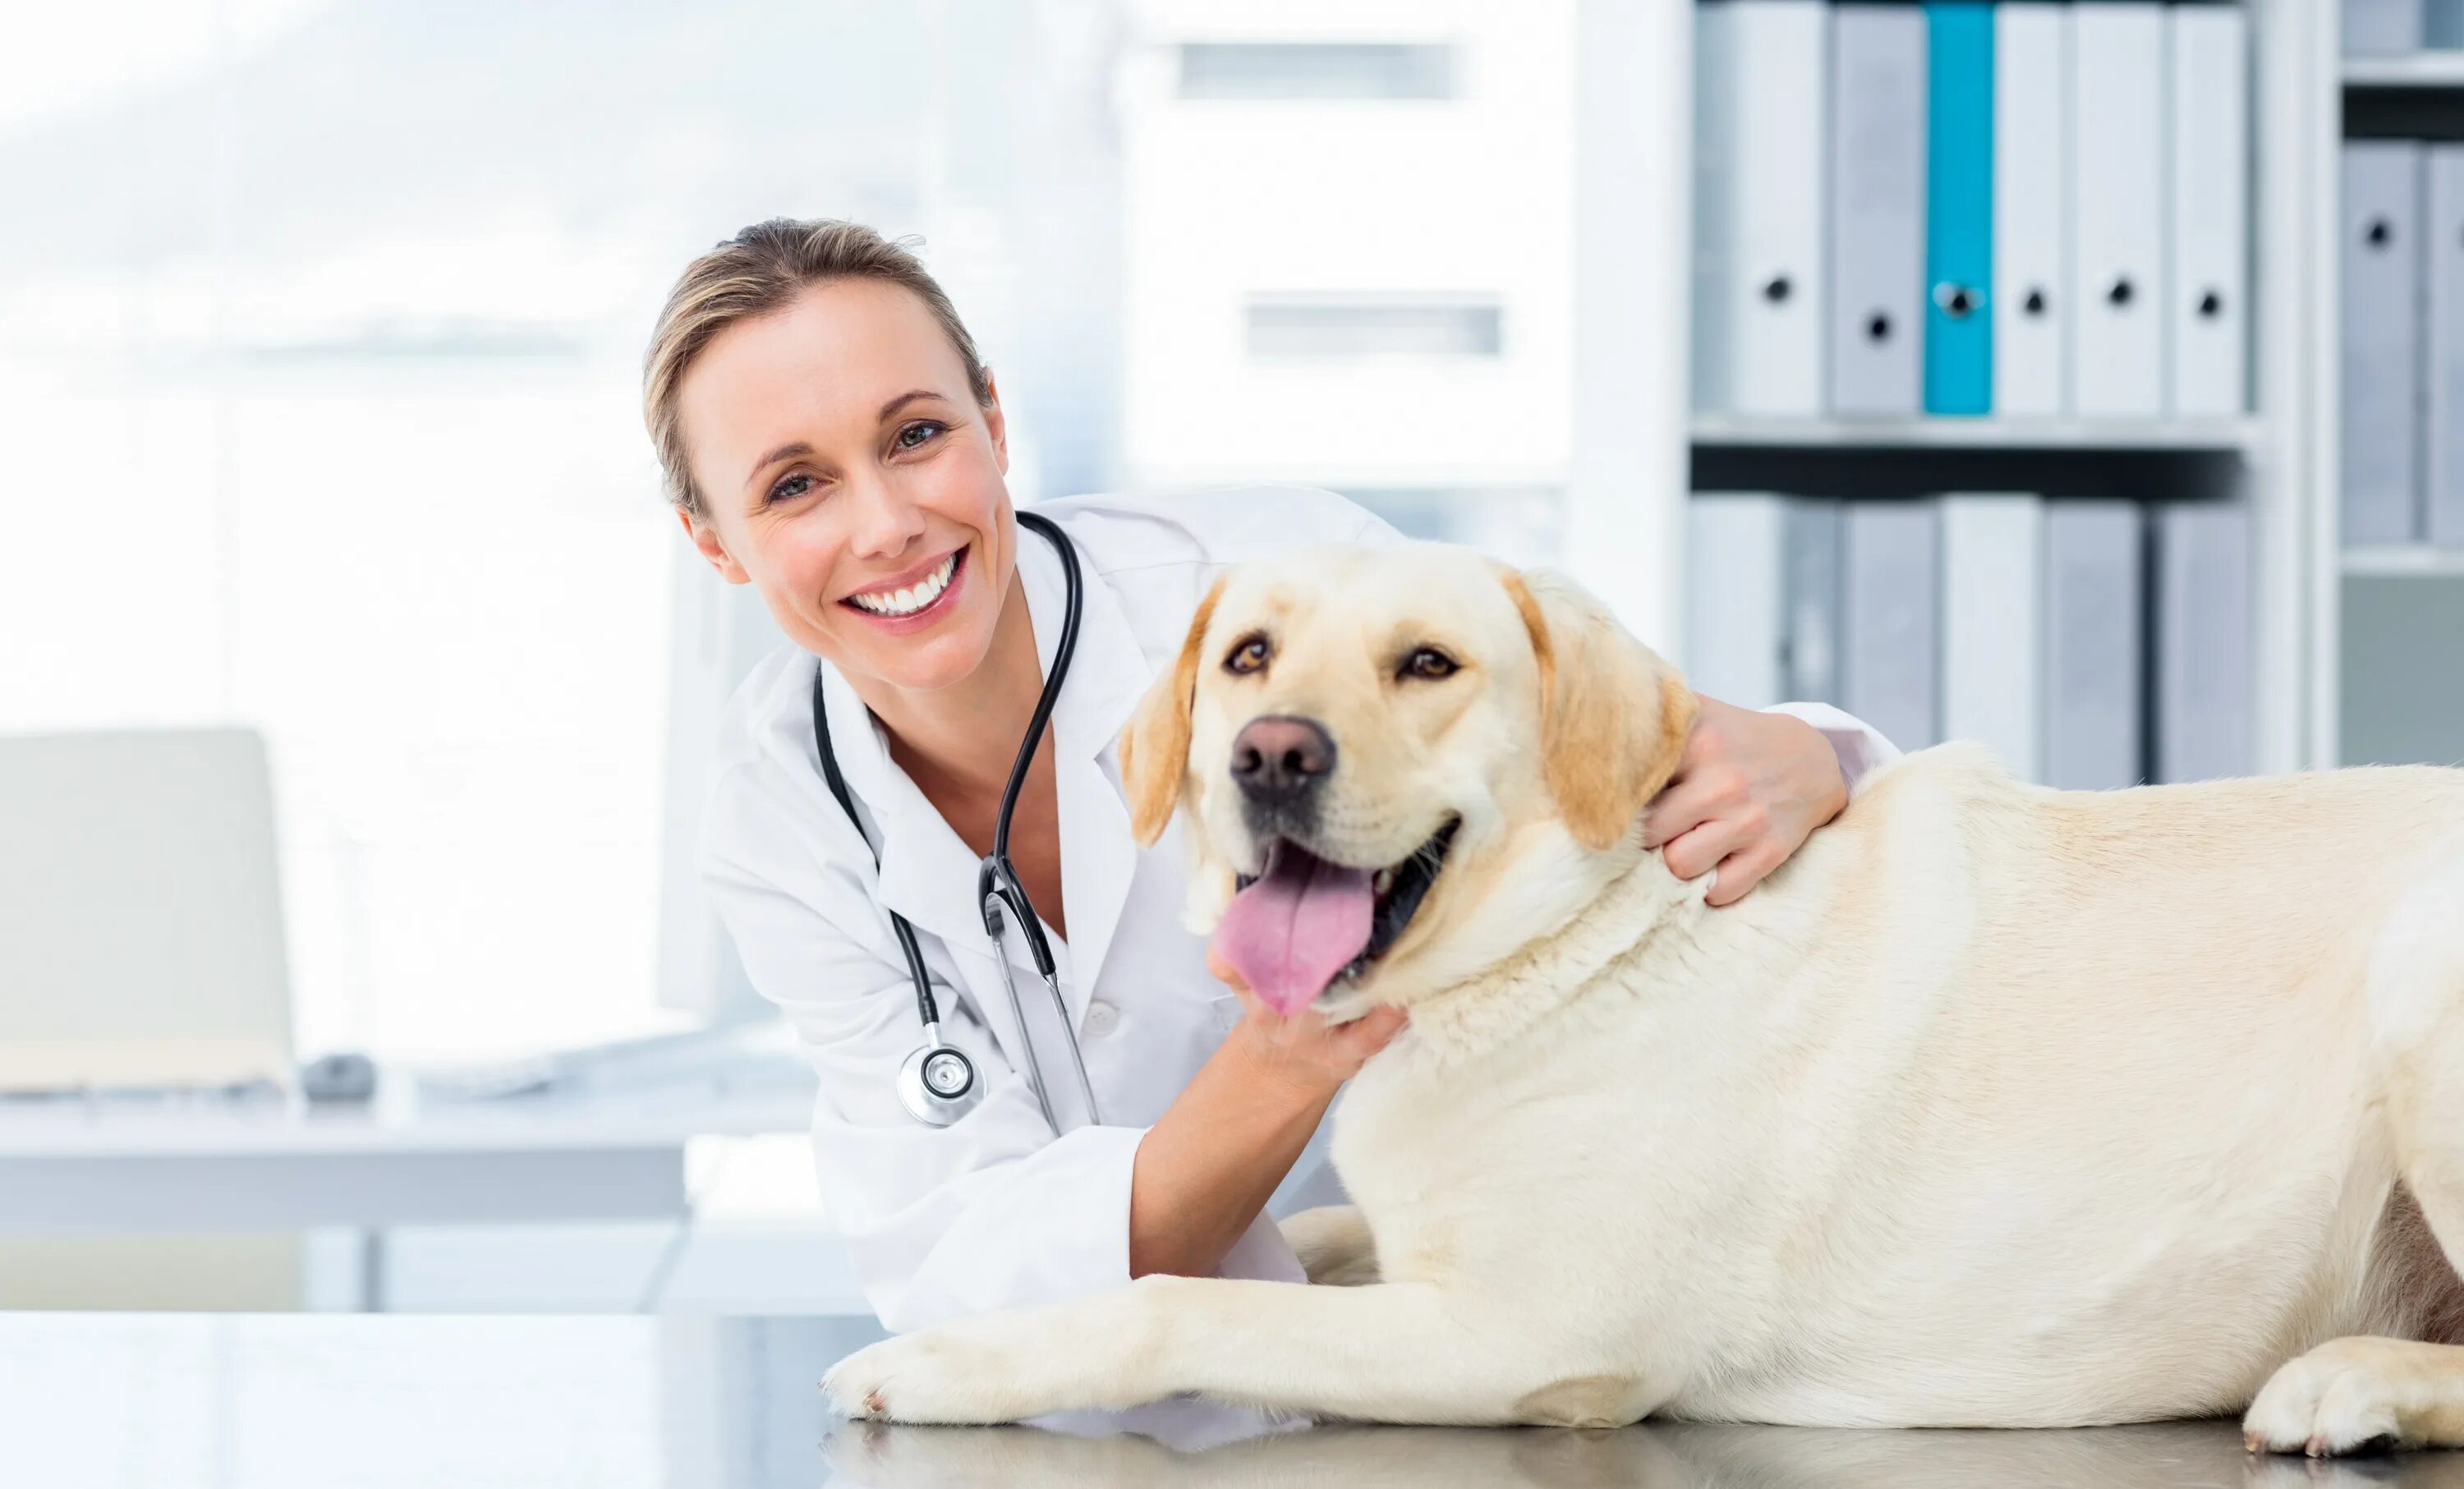 Pet clinic. Ветеринар. Ветеринар женщина. Собака доктор. Собака медик.